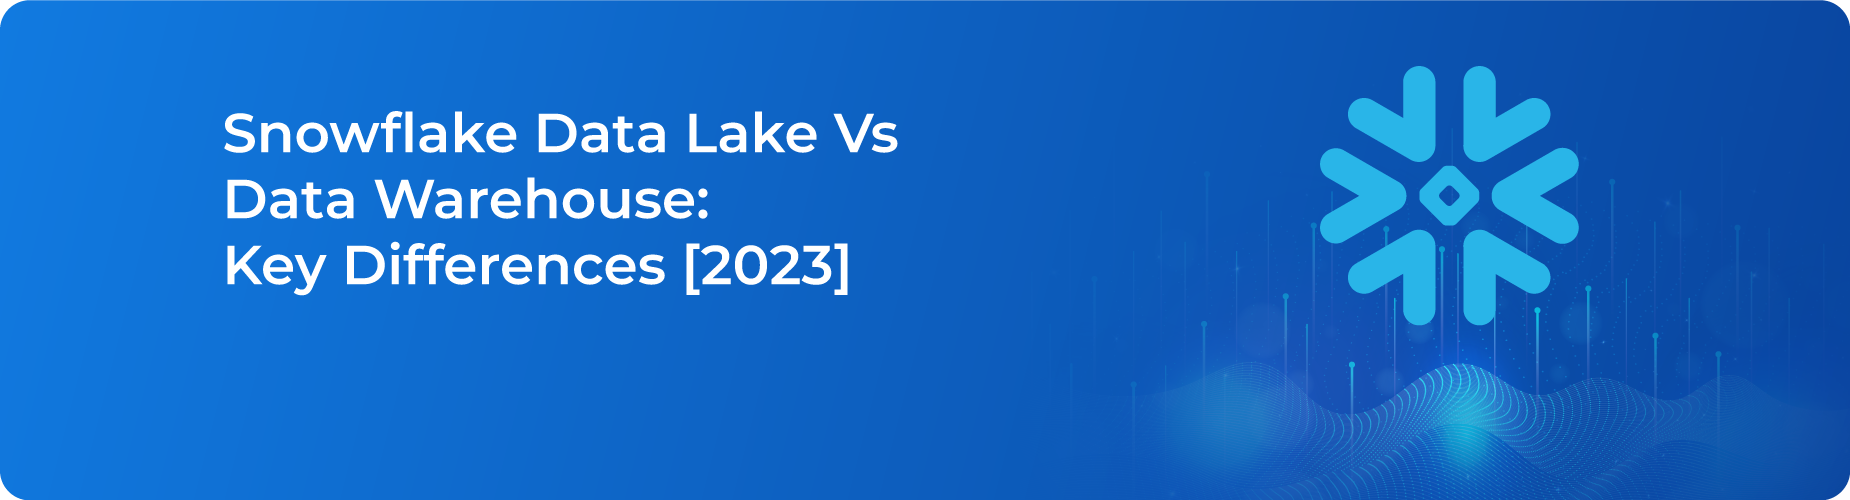 Snowflake Data Lake Vs Data Warehouse key differences